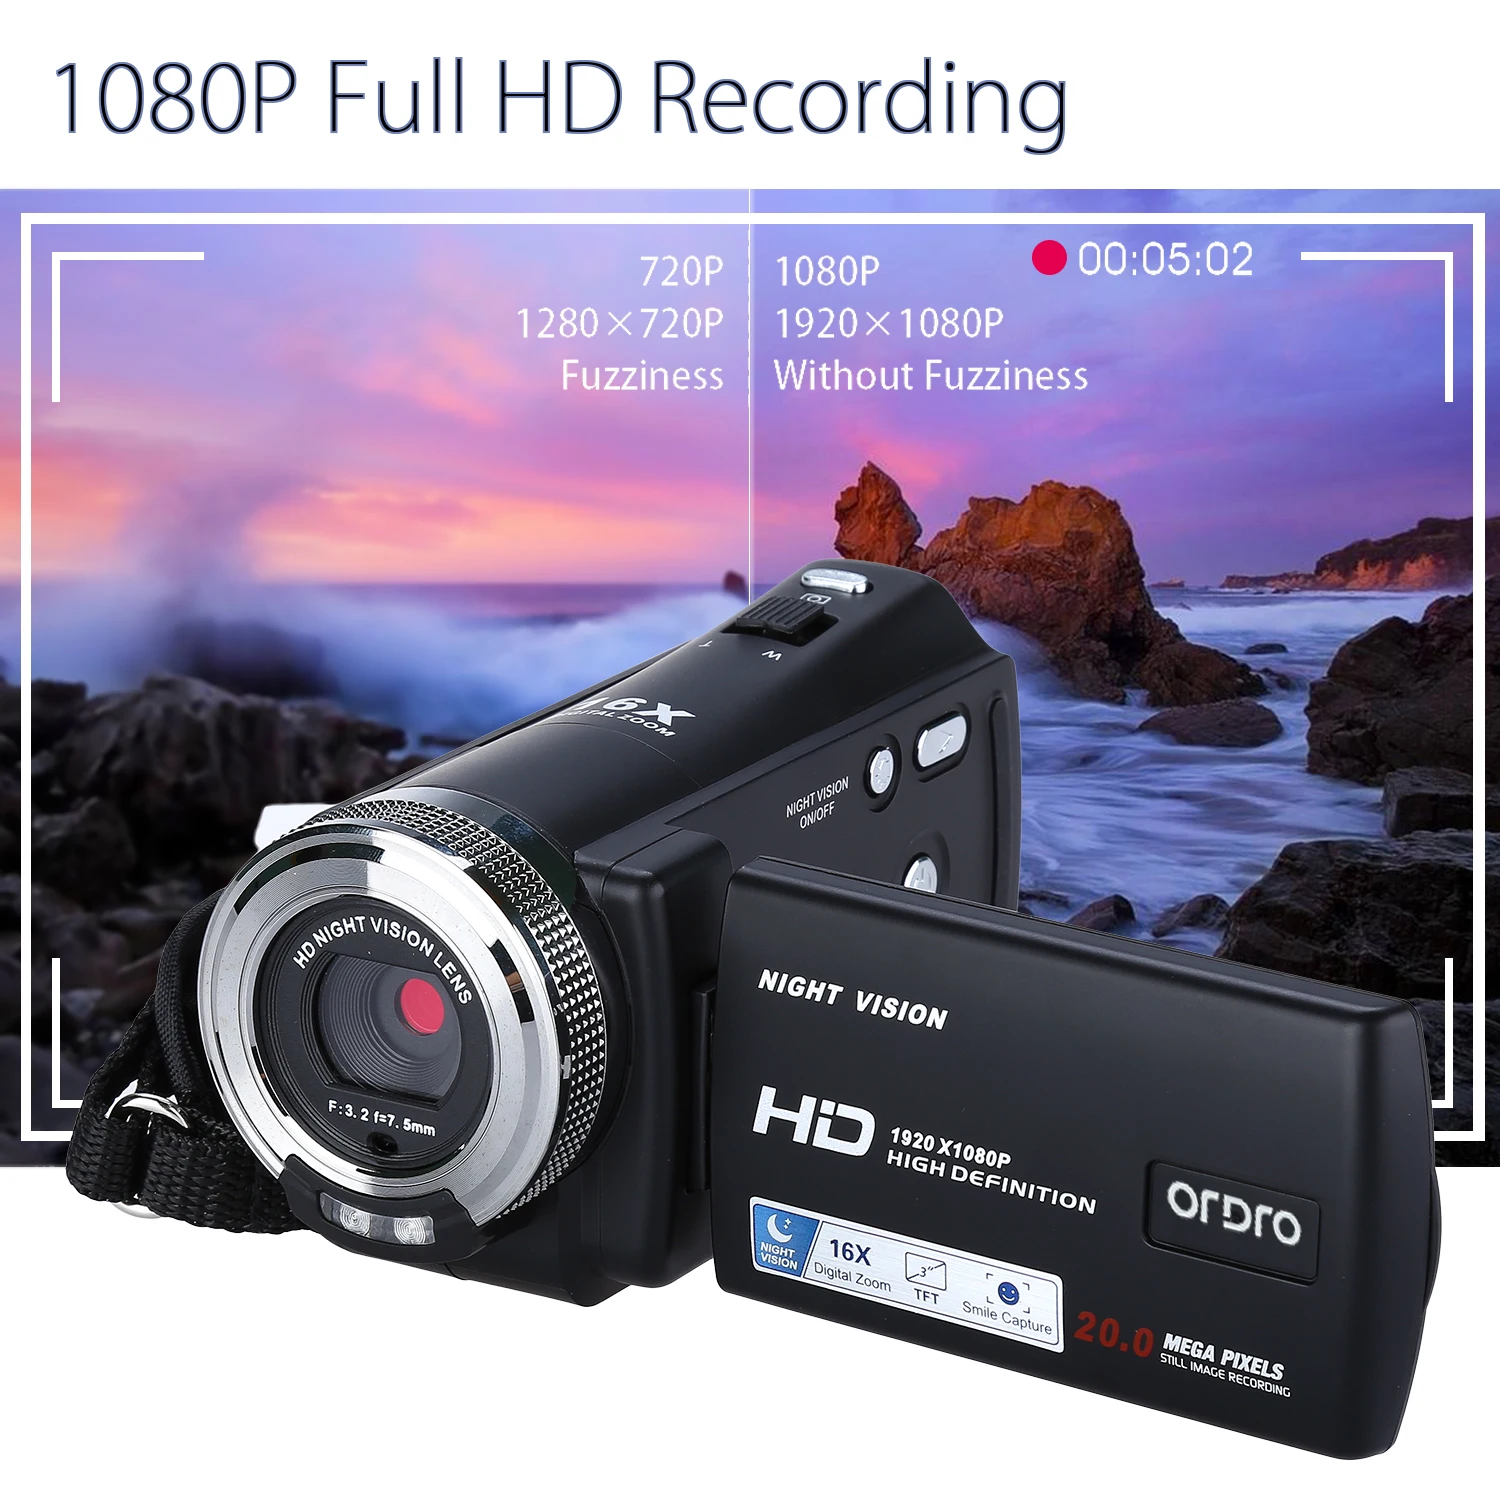 ORDRO HDV-V12 3," lcd 1080P FHD цифровая камера видеокамера 16x Zoom DVR IR ночного видения CMOS сенсор Микрофон+ 2 шт. батарея